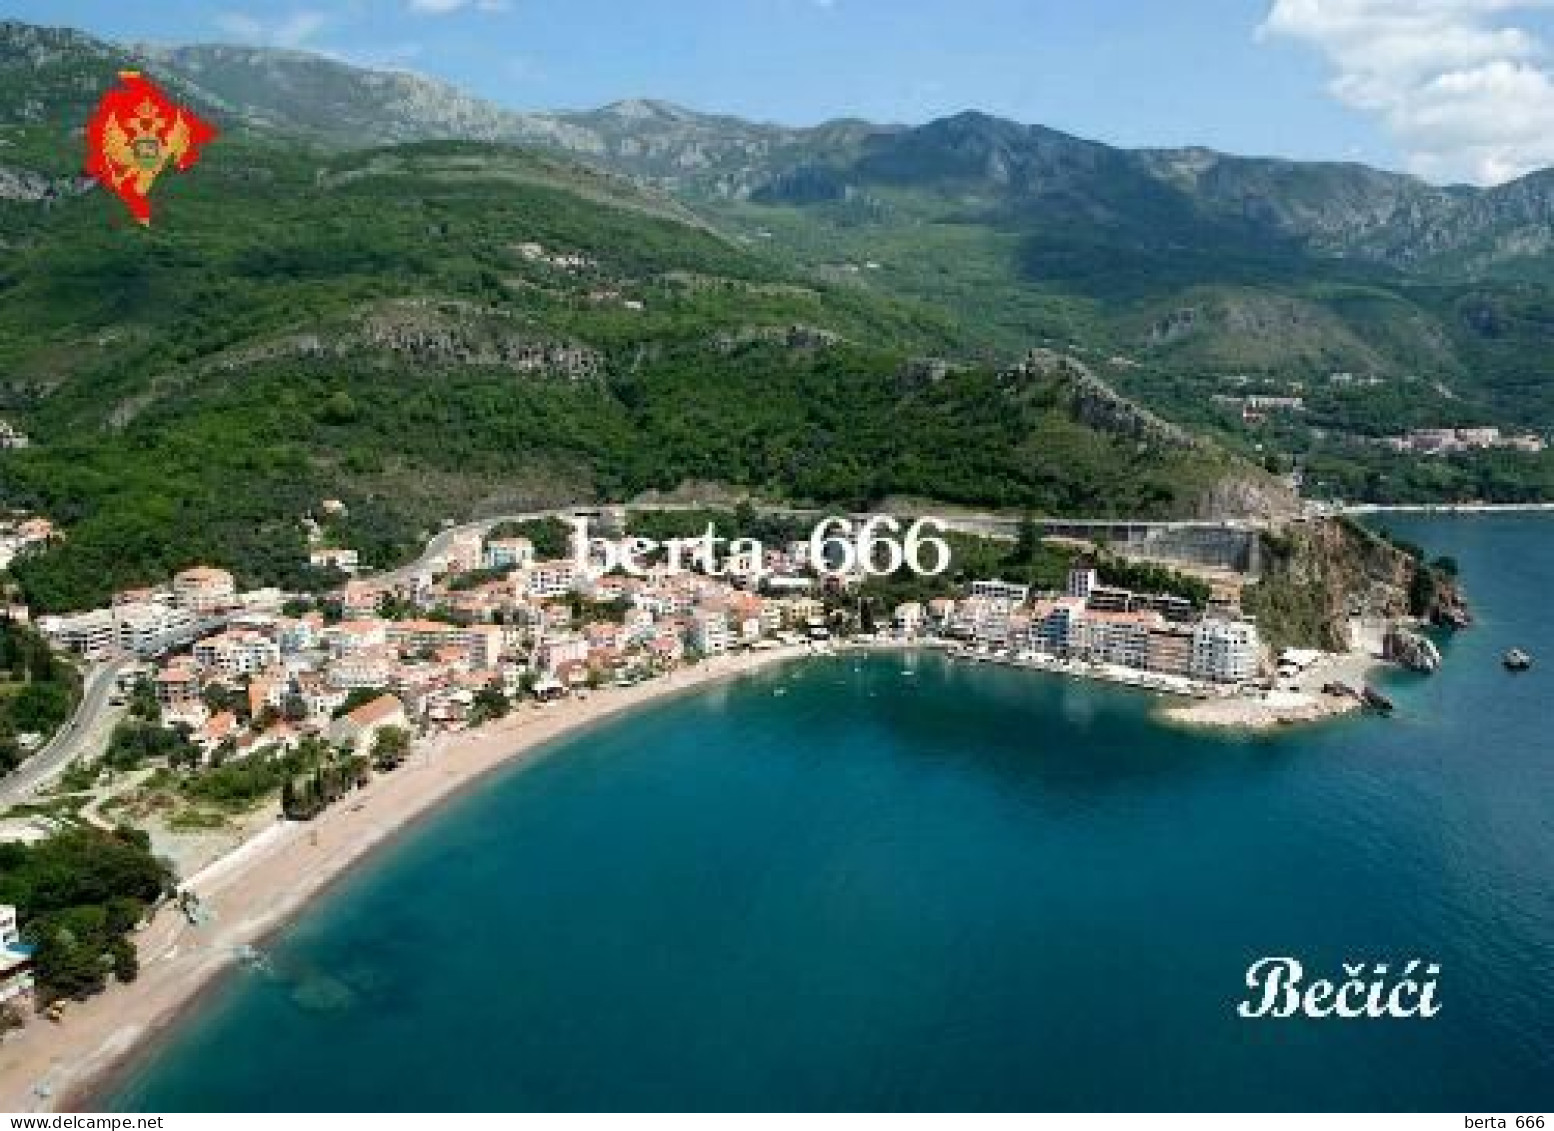 Montenegro Becici Aerial View New Postcard - Montenegro